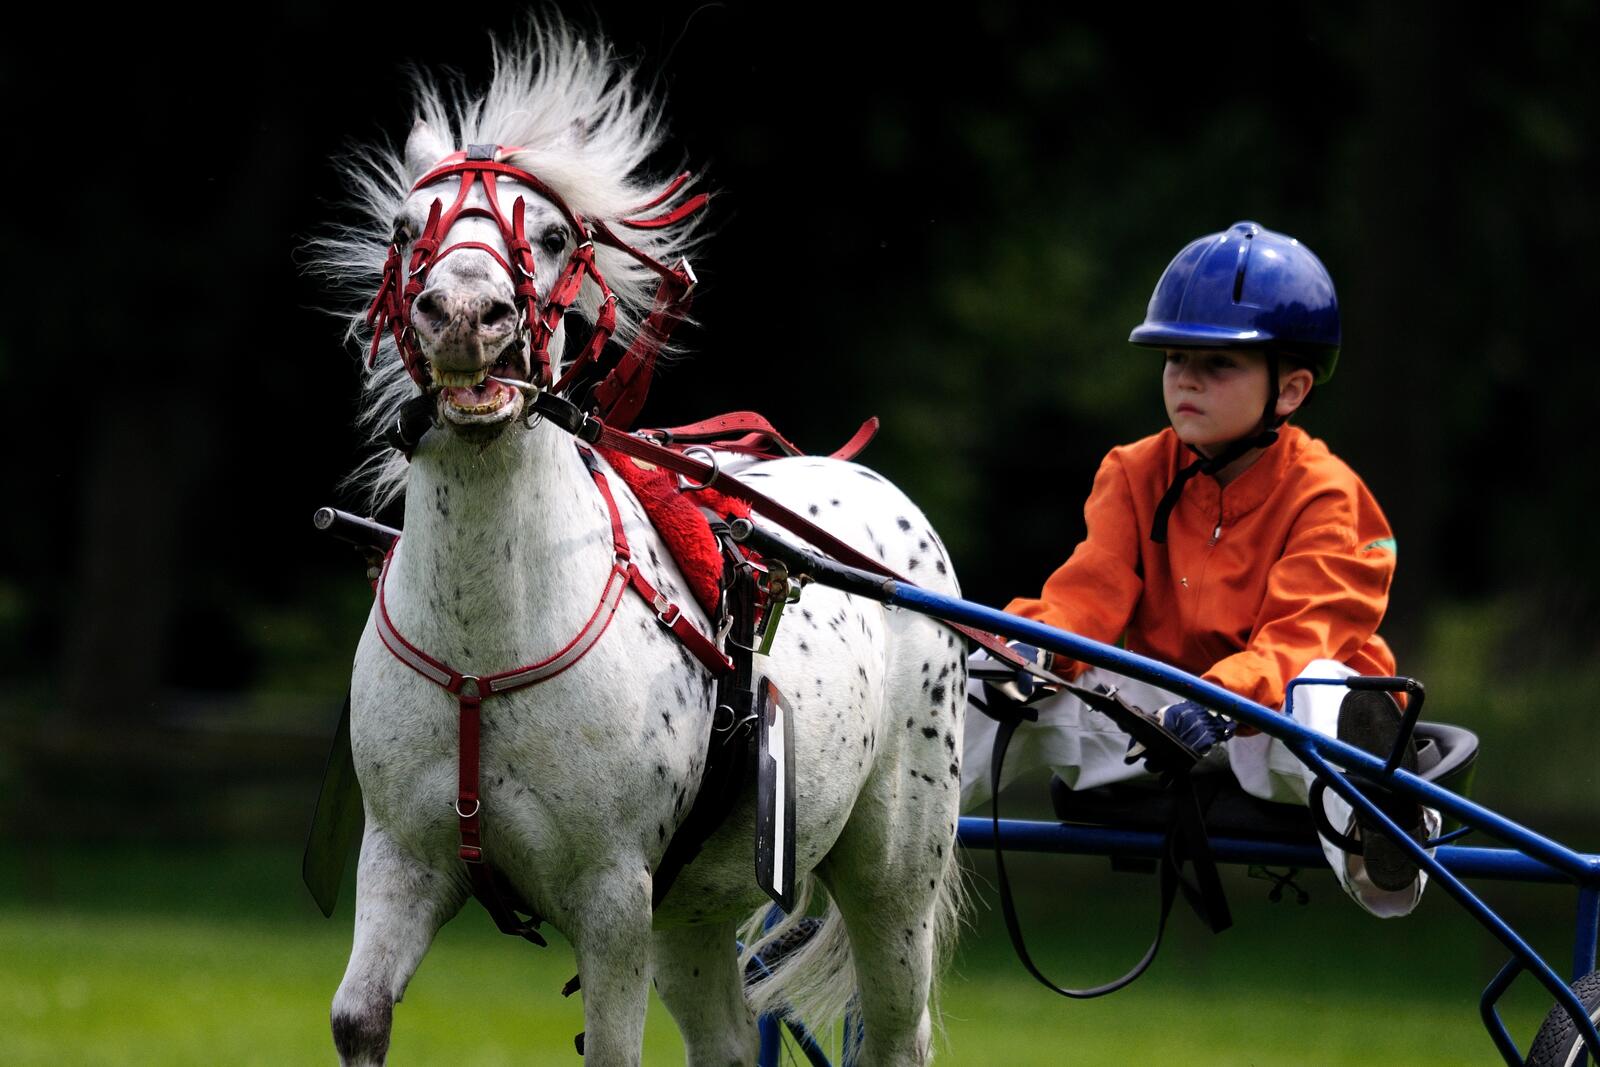 Wallpapers sport horse equestrianism on the desktop